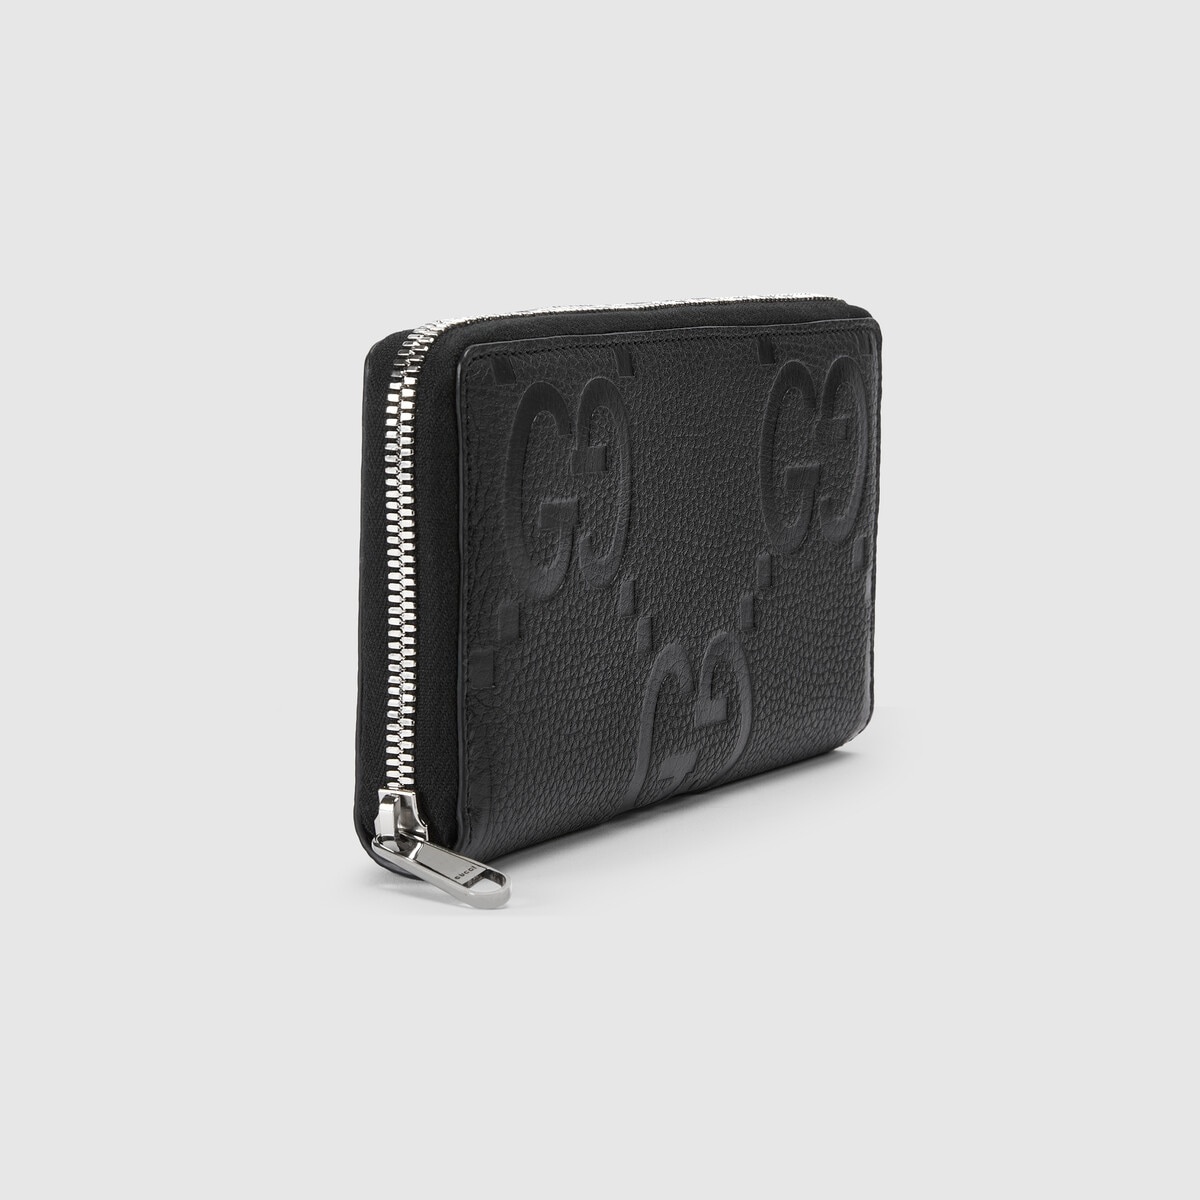 Jumbo GG zip around wallet - 3